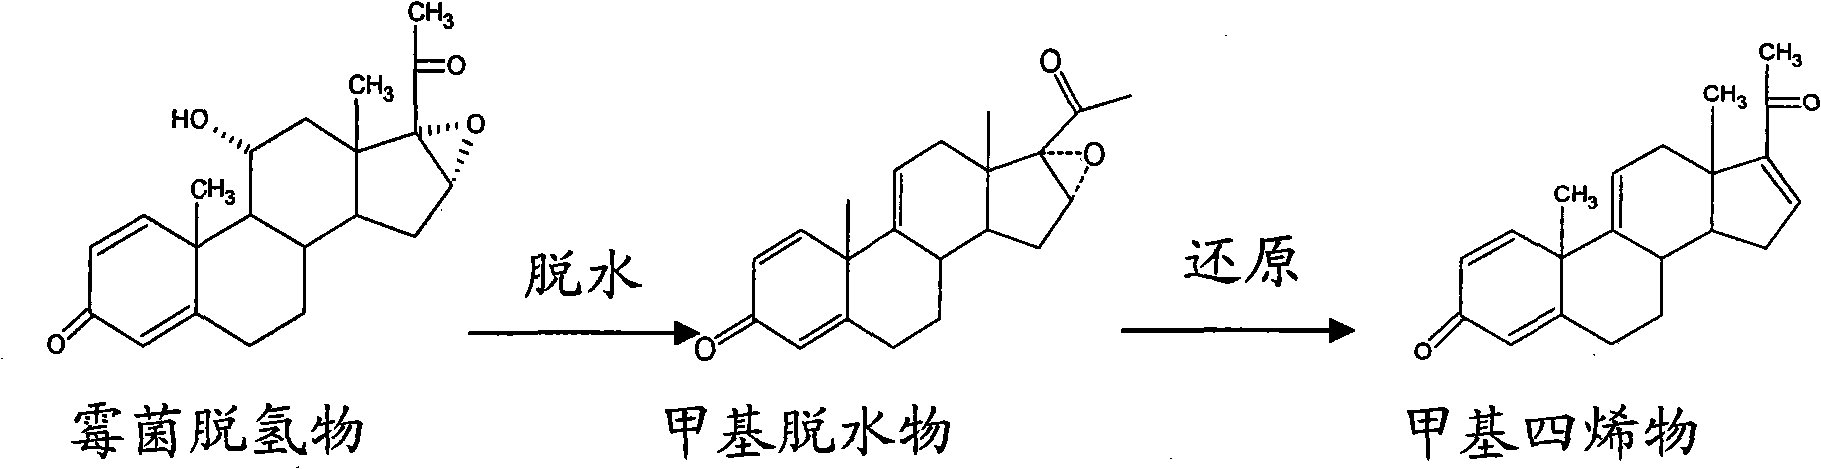 Method for producing important steroid hormone dexamethasone methyl tetraenes intermediate